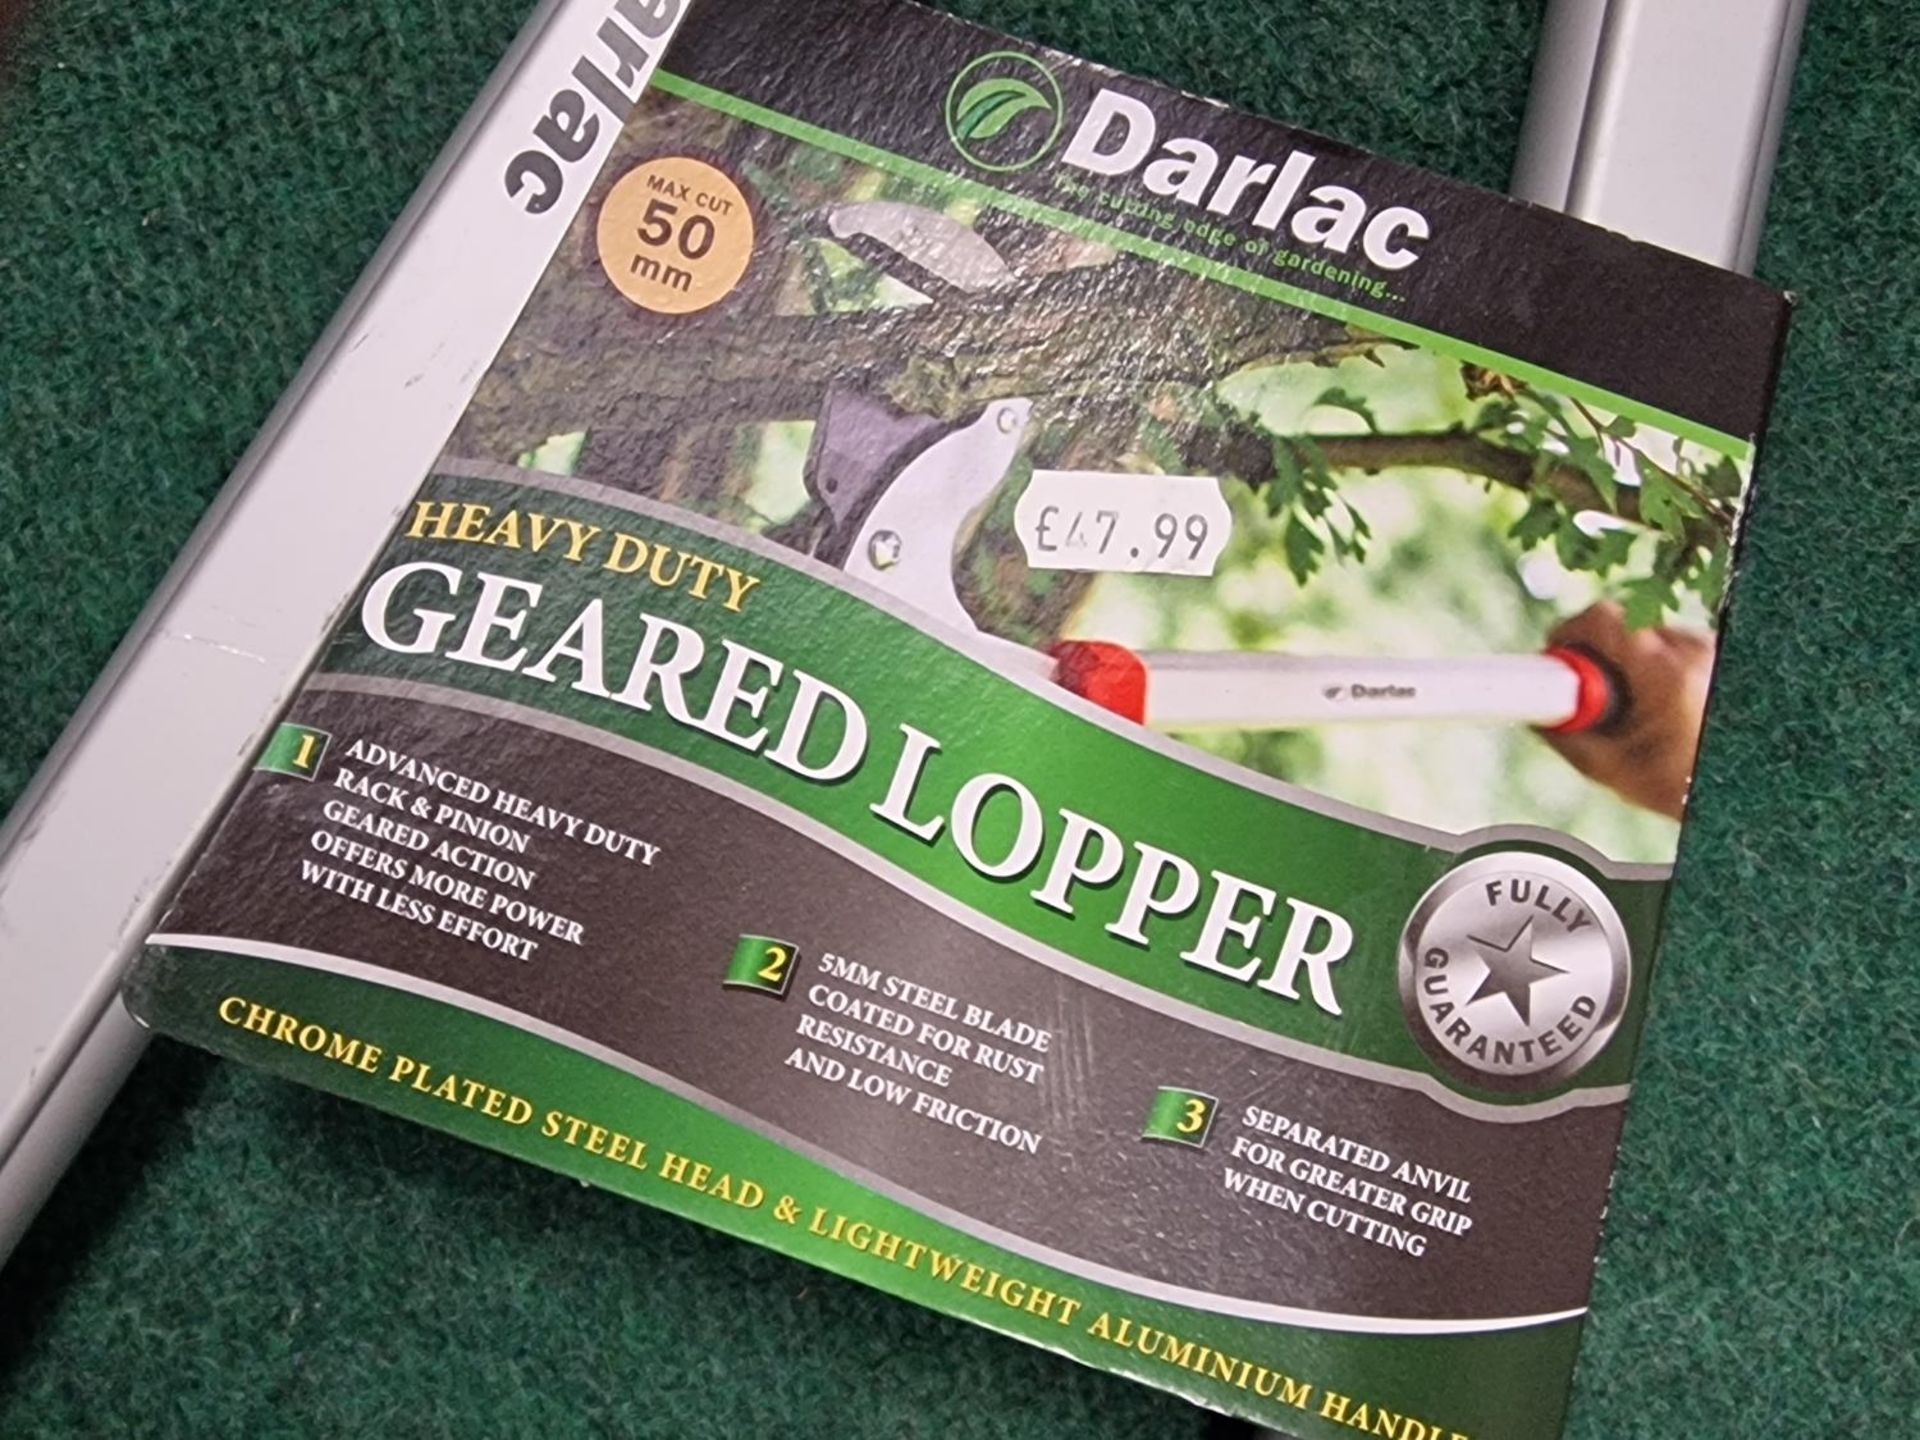 Darlac heavy duty geared garden loppers appear new. - Image 2 of 2